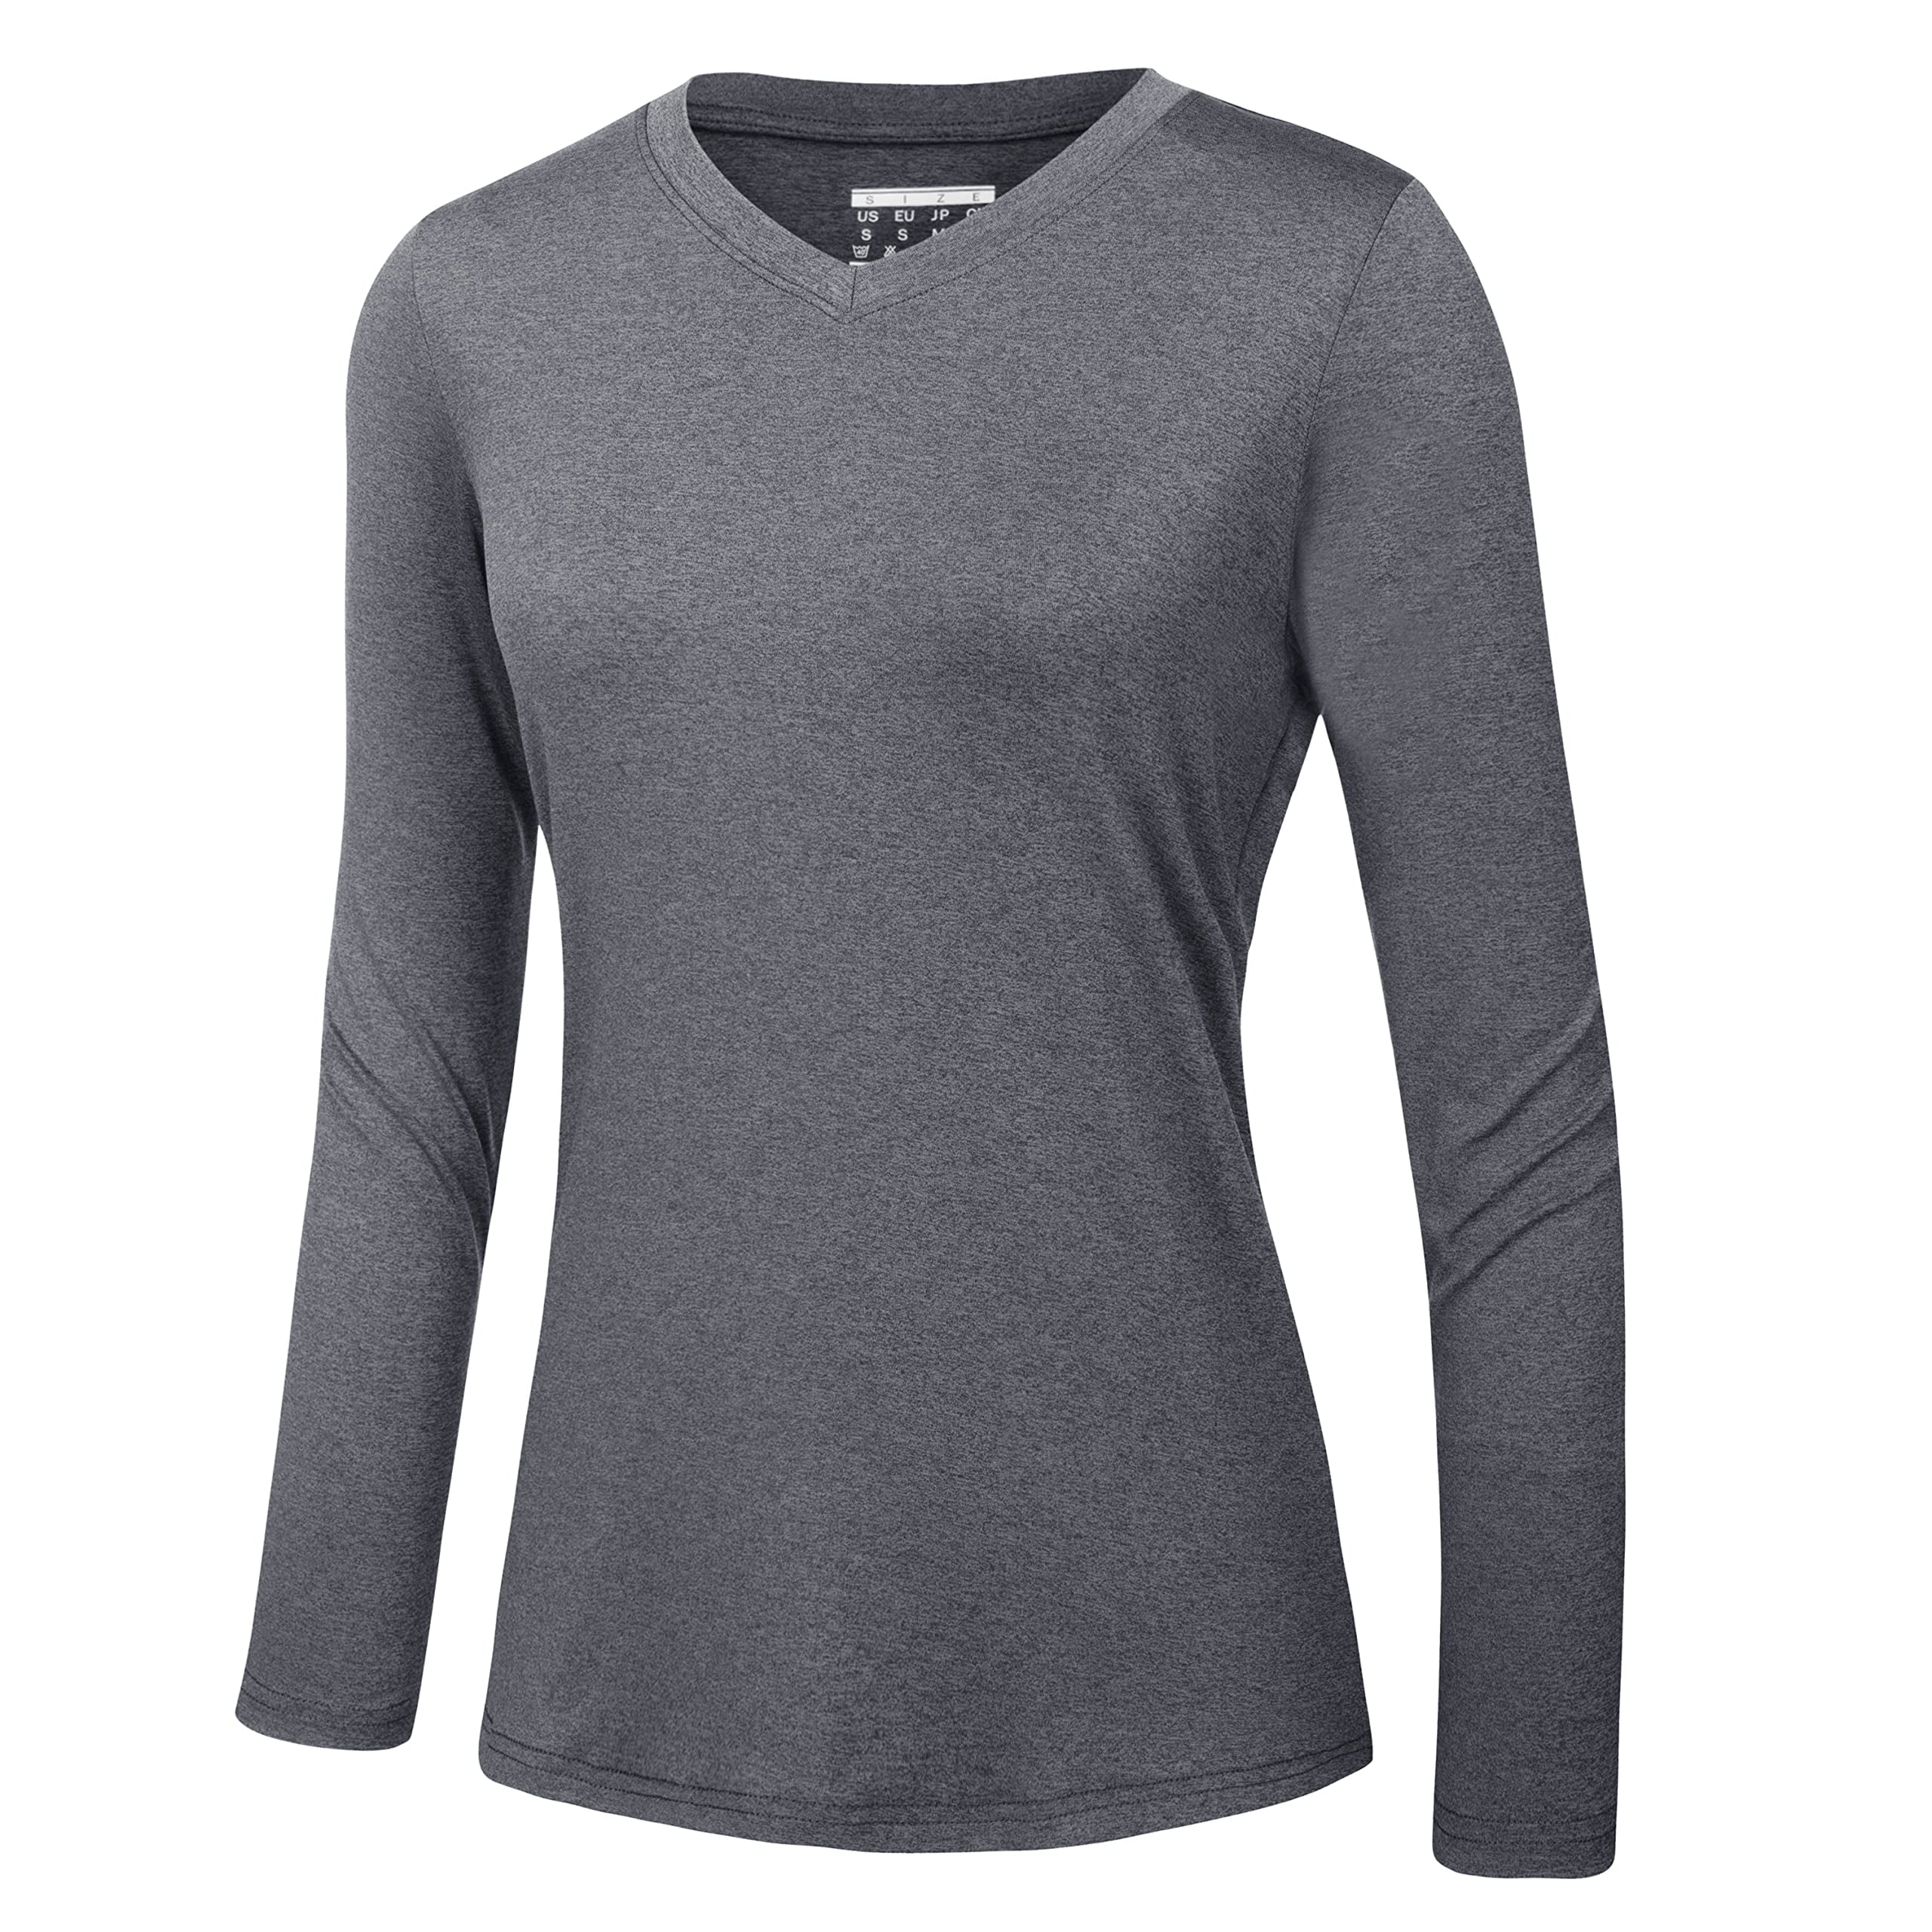 MAGCOMSEN Swim Shirt for Women Long Sleeve UV Protection Shirts Quick Dry  Lightweight Rash Guard Shirt Dary Grey,S